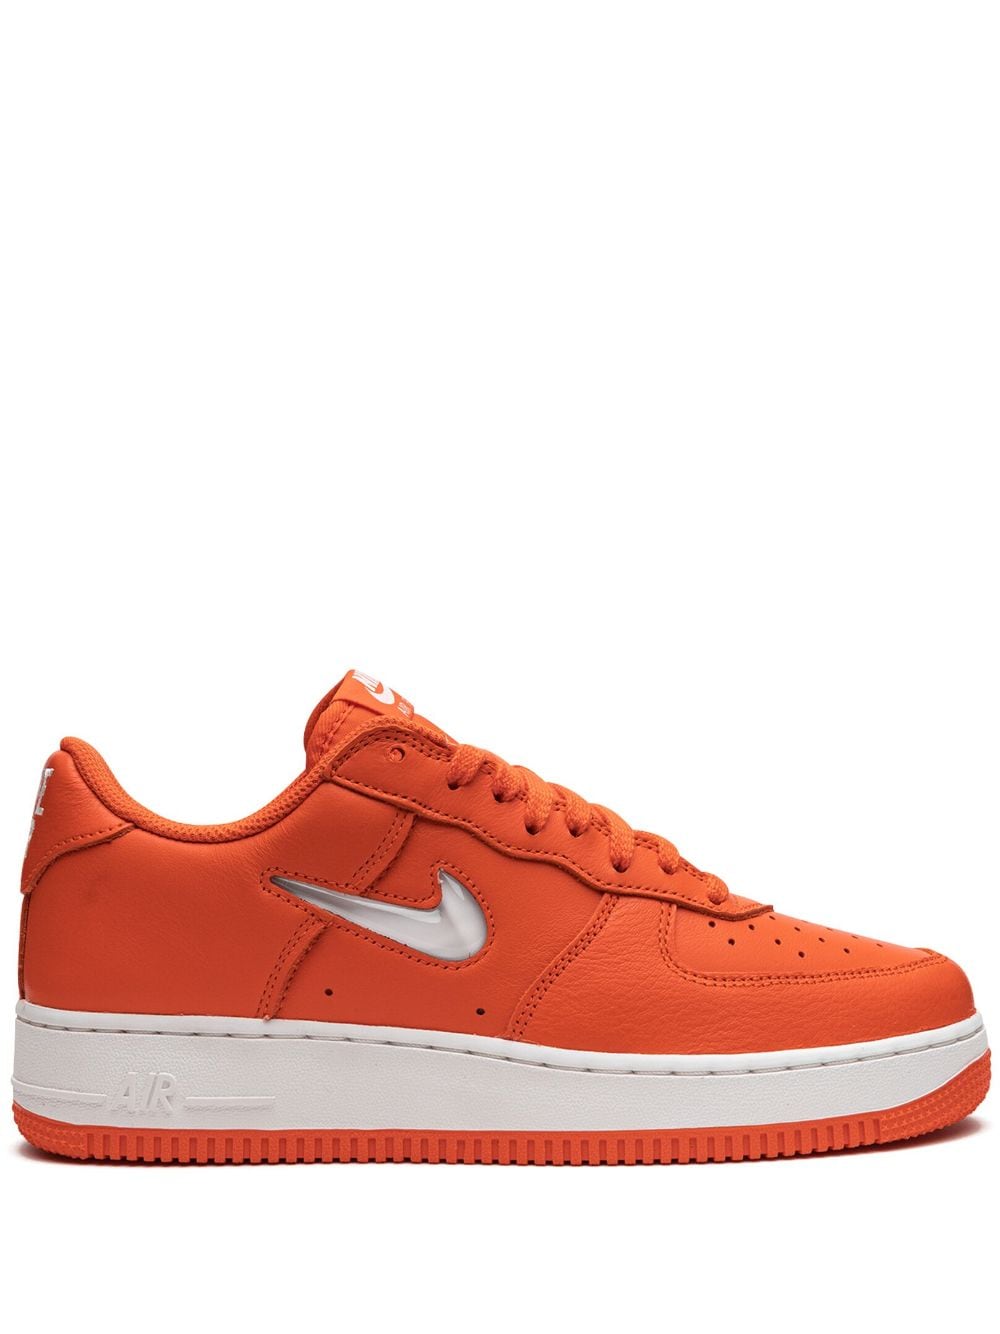 Nike Air Force 1 Low "40th Anniversary Edition Orange Jewel" sneakers von Nike